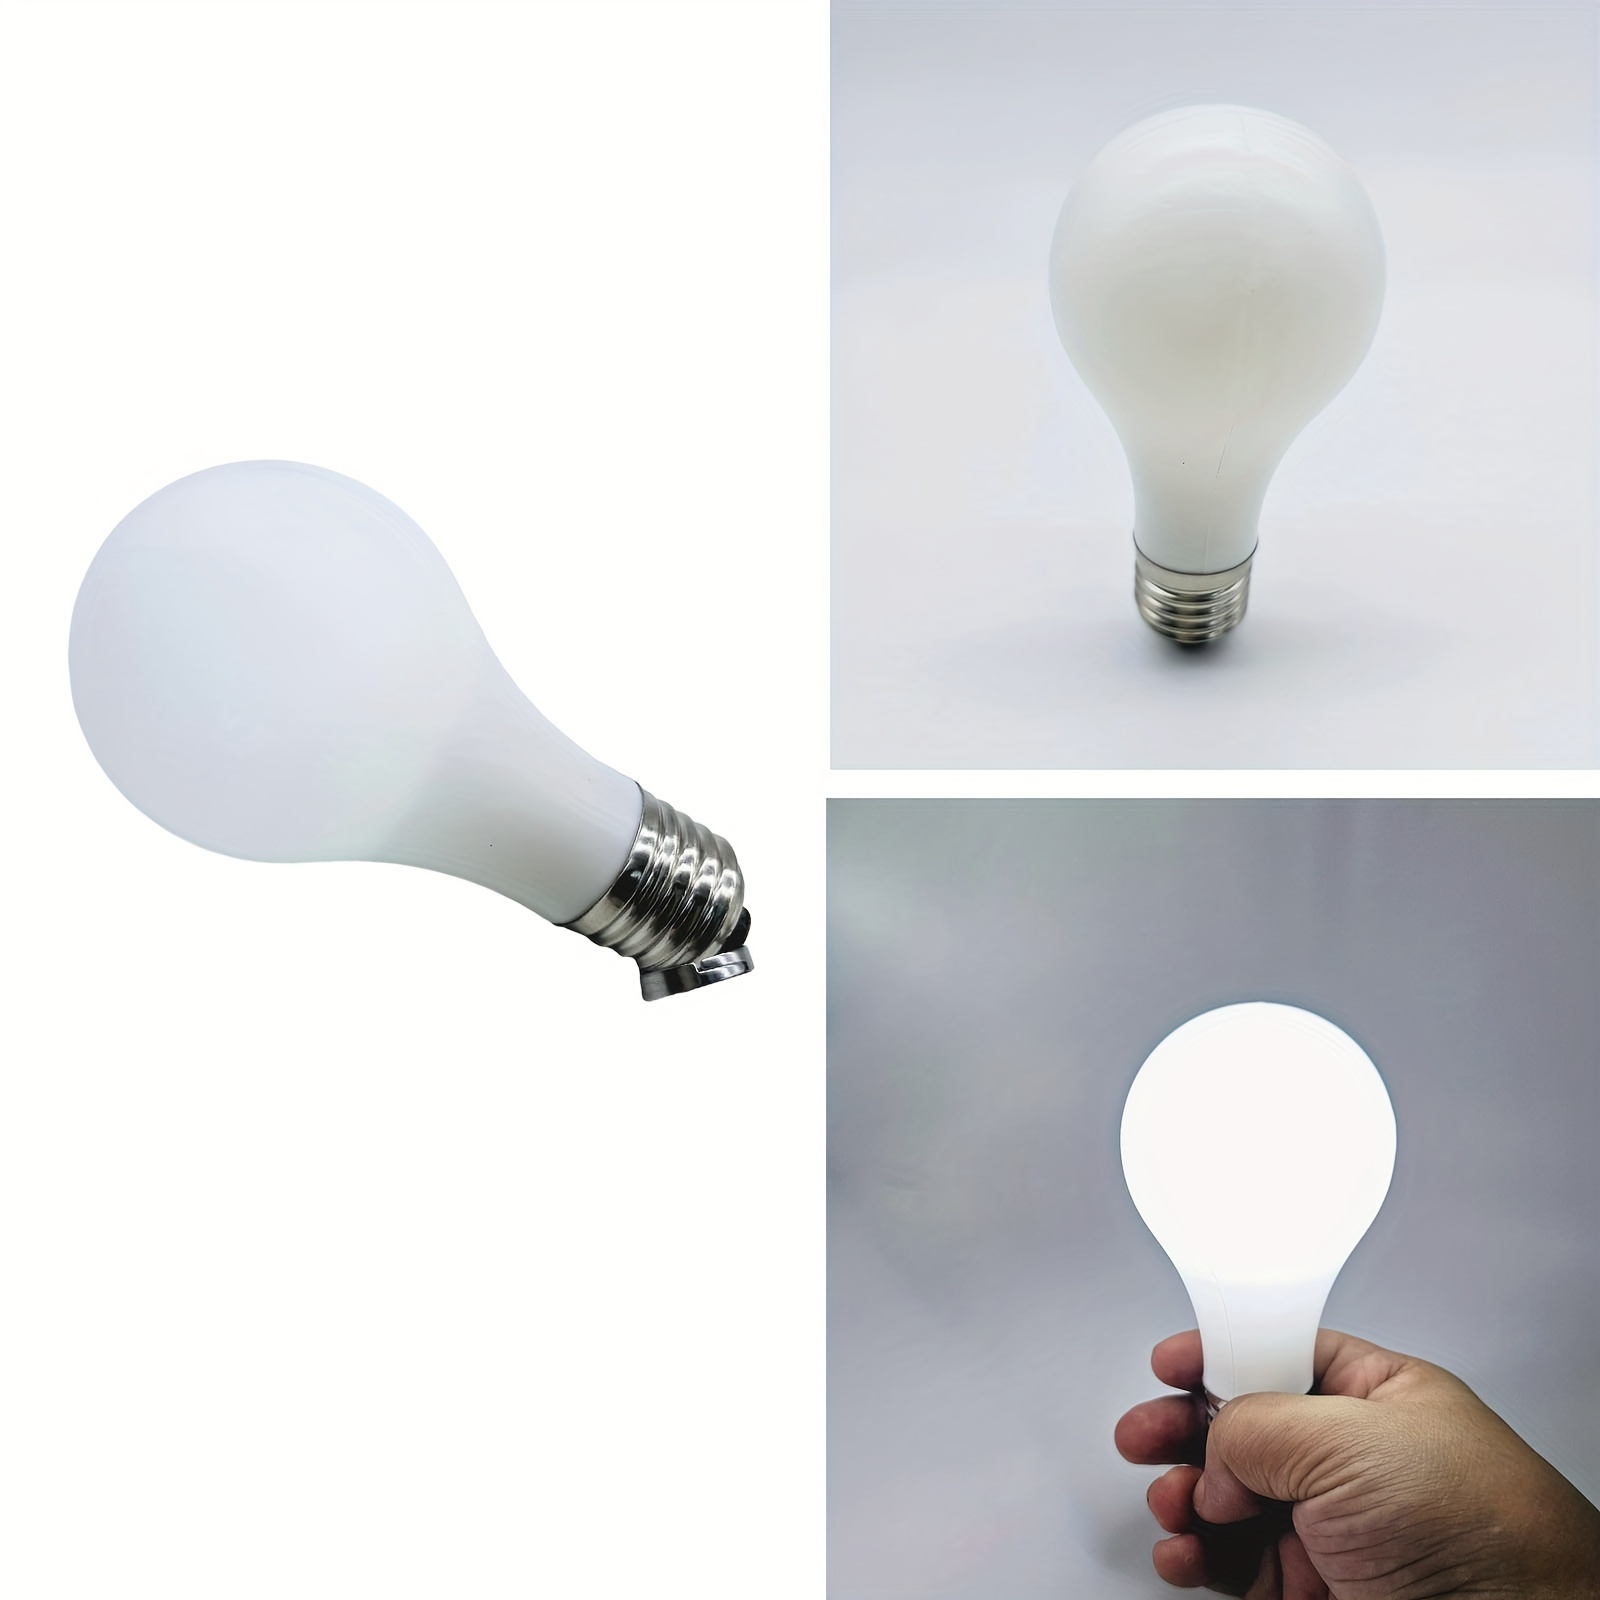 

2set, (2box, 2magic Lamp, 4rings) Lamp Led Glow In Hand Push Button Model Battery Light Bulb For Magic Trick, White Light, H 11cm W 6cm